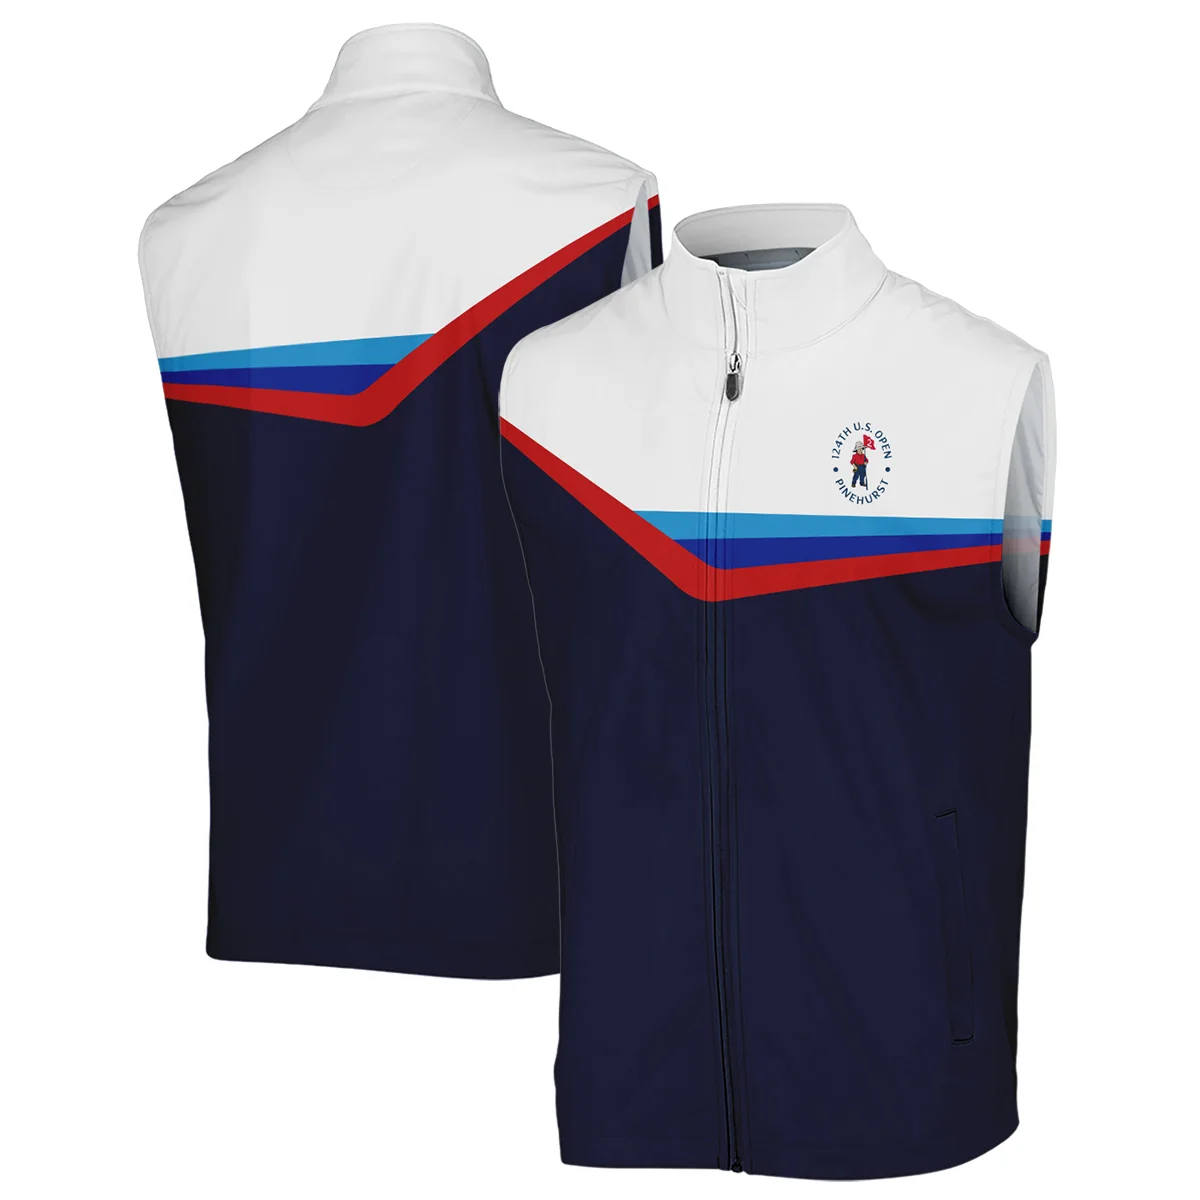 124th U.S. Open Pinehurst Golf Blue Red Line White Pattern Titleist Sleeveless Jacket Style Classic Sleeveless Jacket